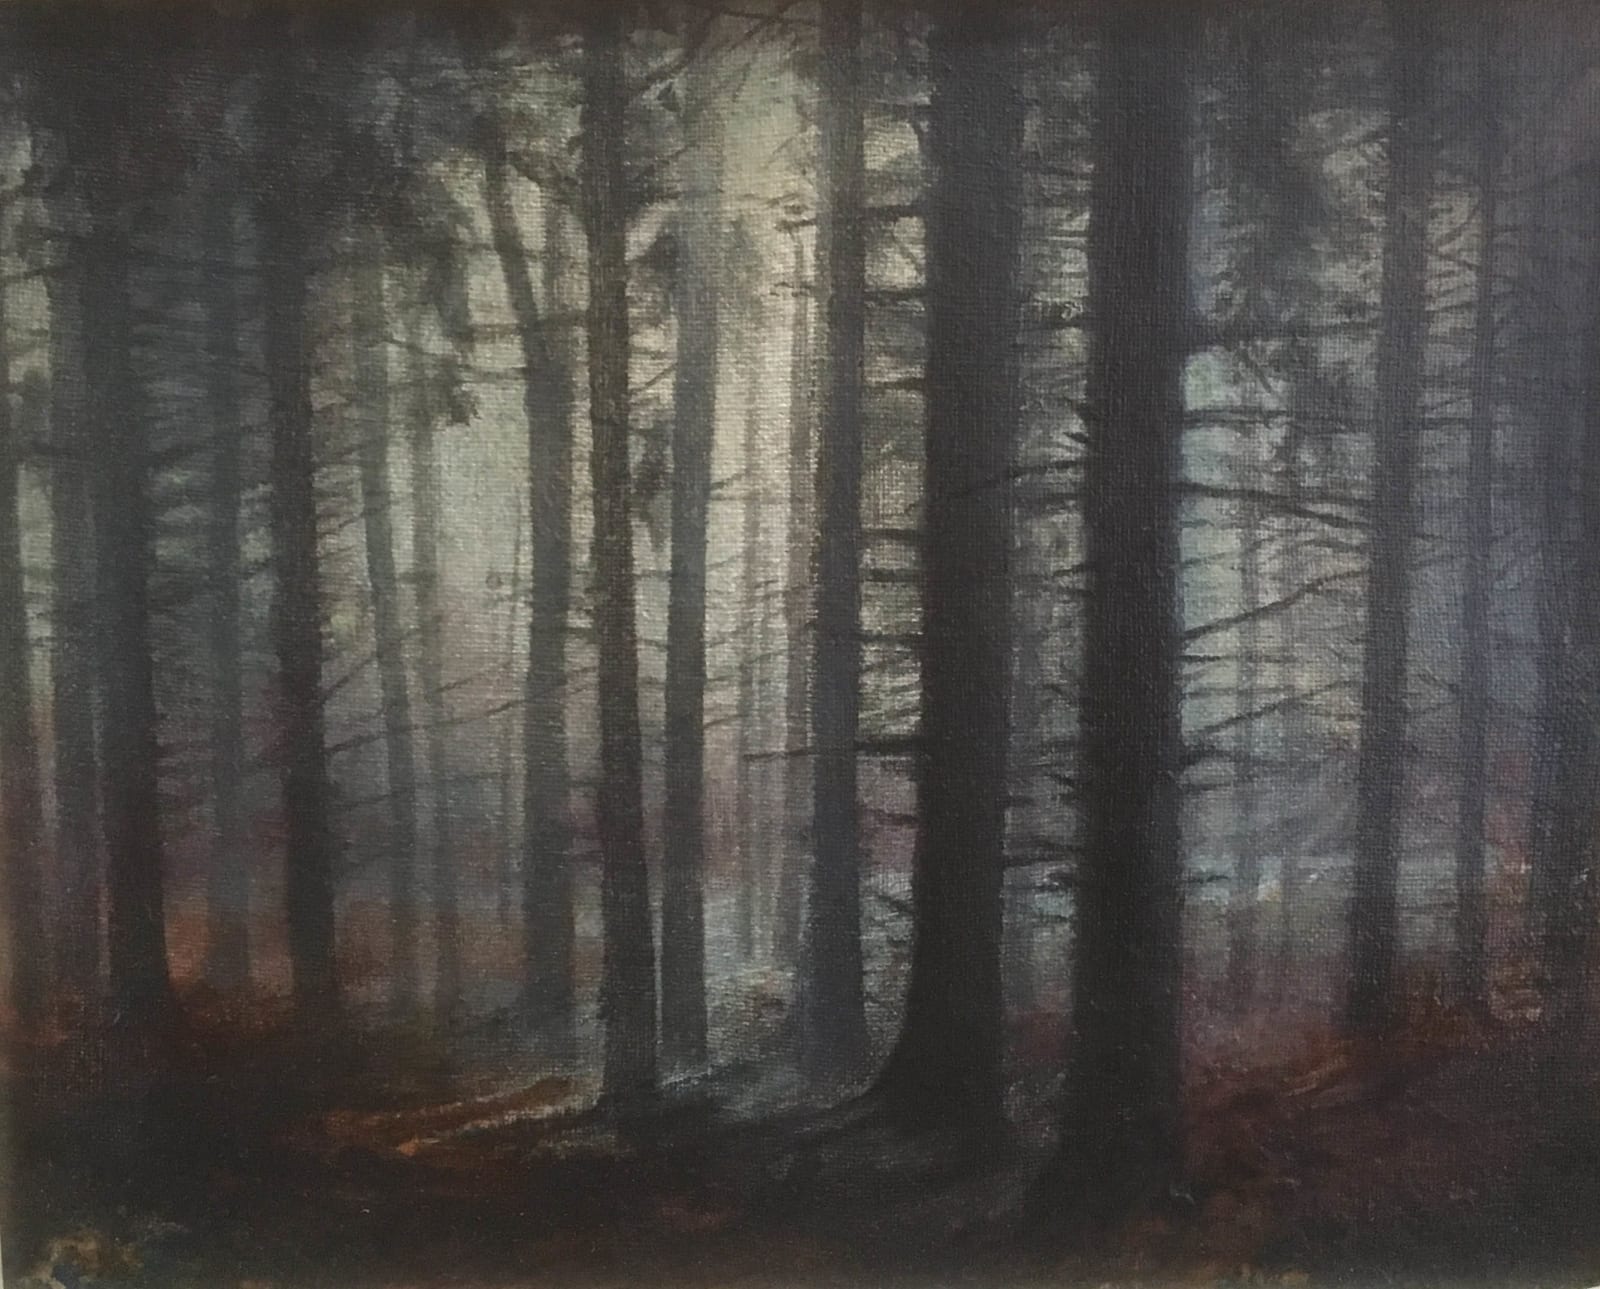 Nerine Tassie, Winter Light Through the Trees